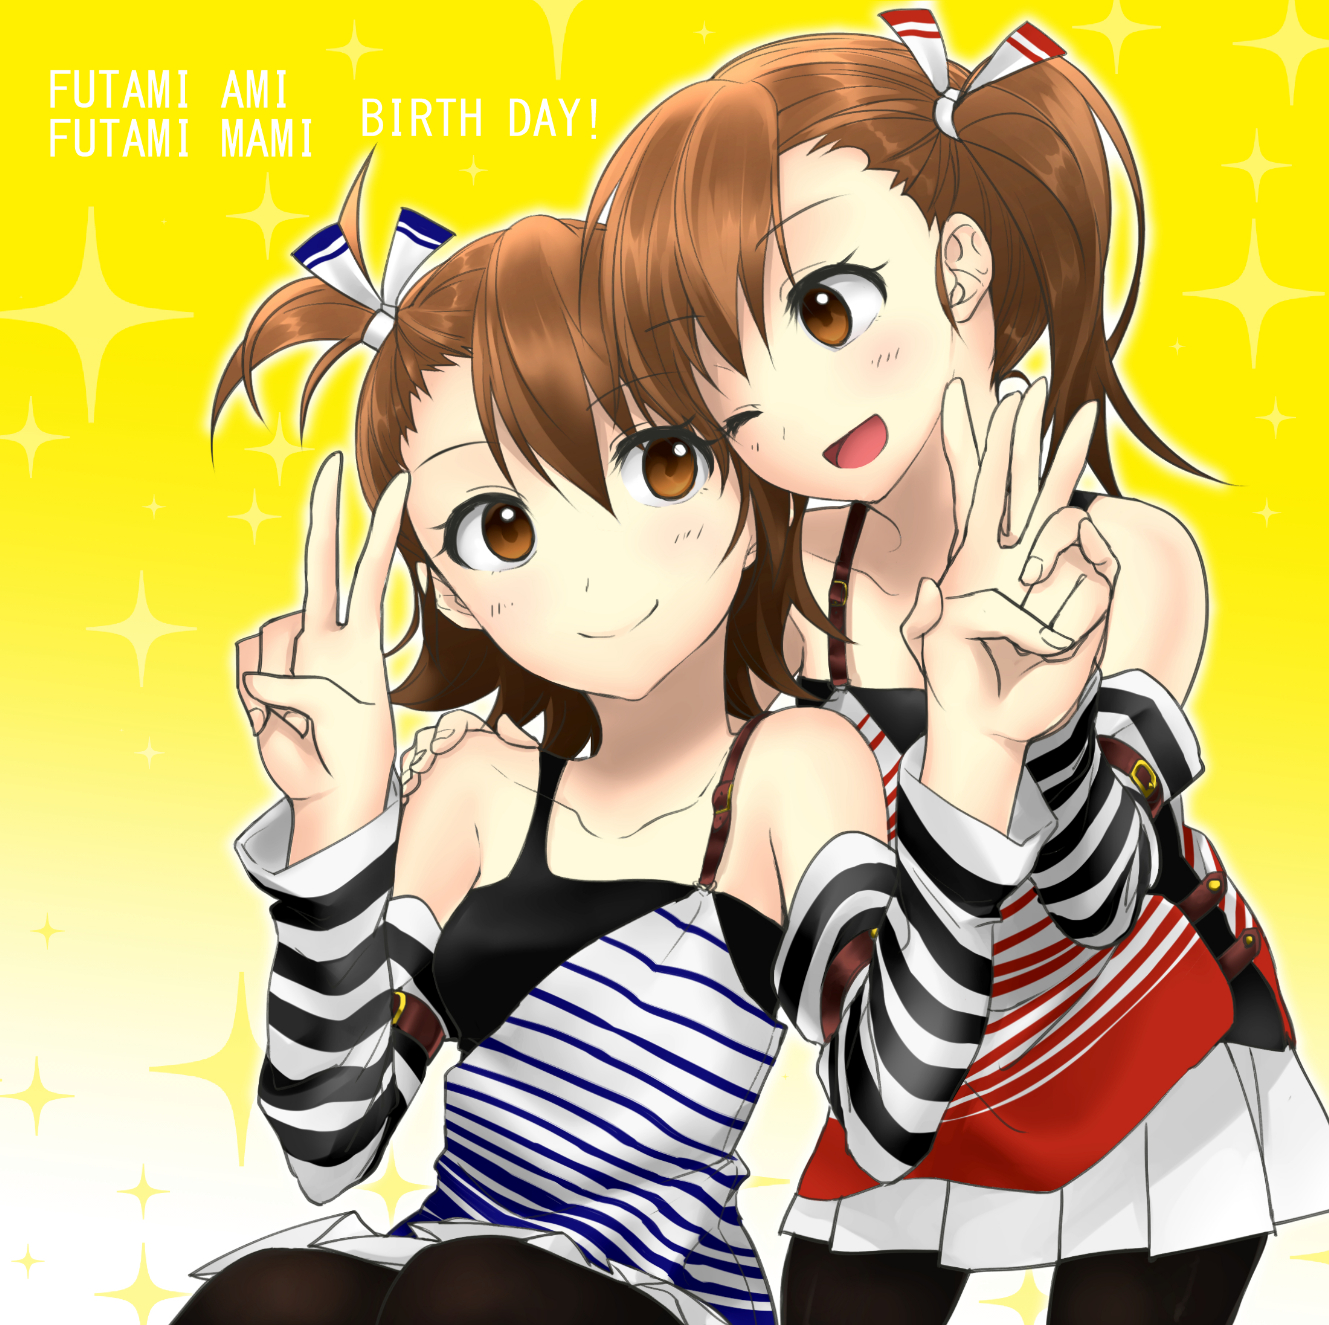 Anime 1329x1325 anime anime girls THE iDOLM@STER Futami Ami Futami Mami long sleeves brunette twins two women artwork digital art fan art